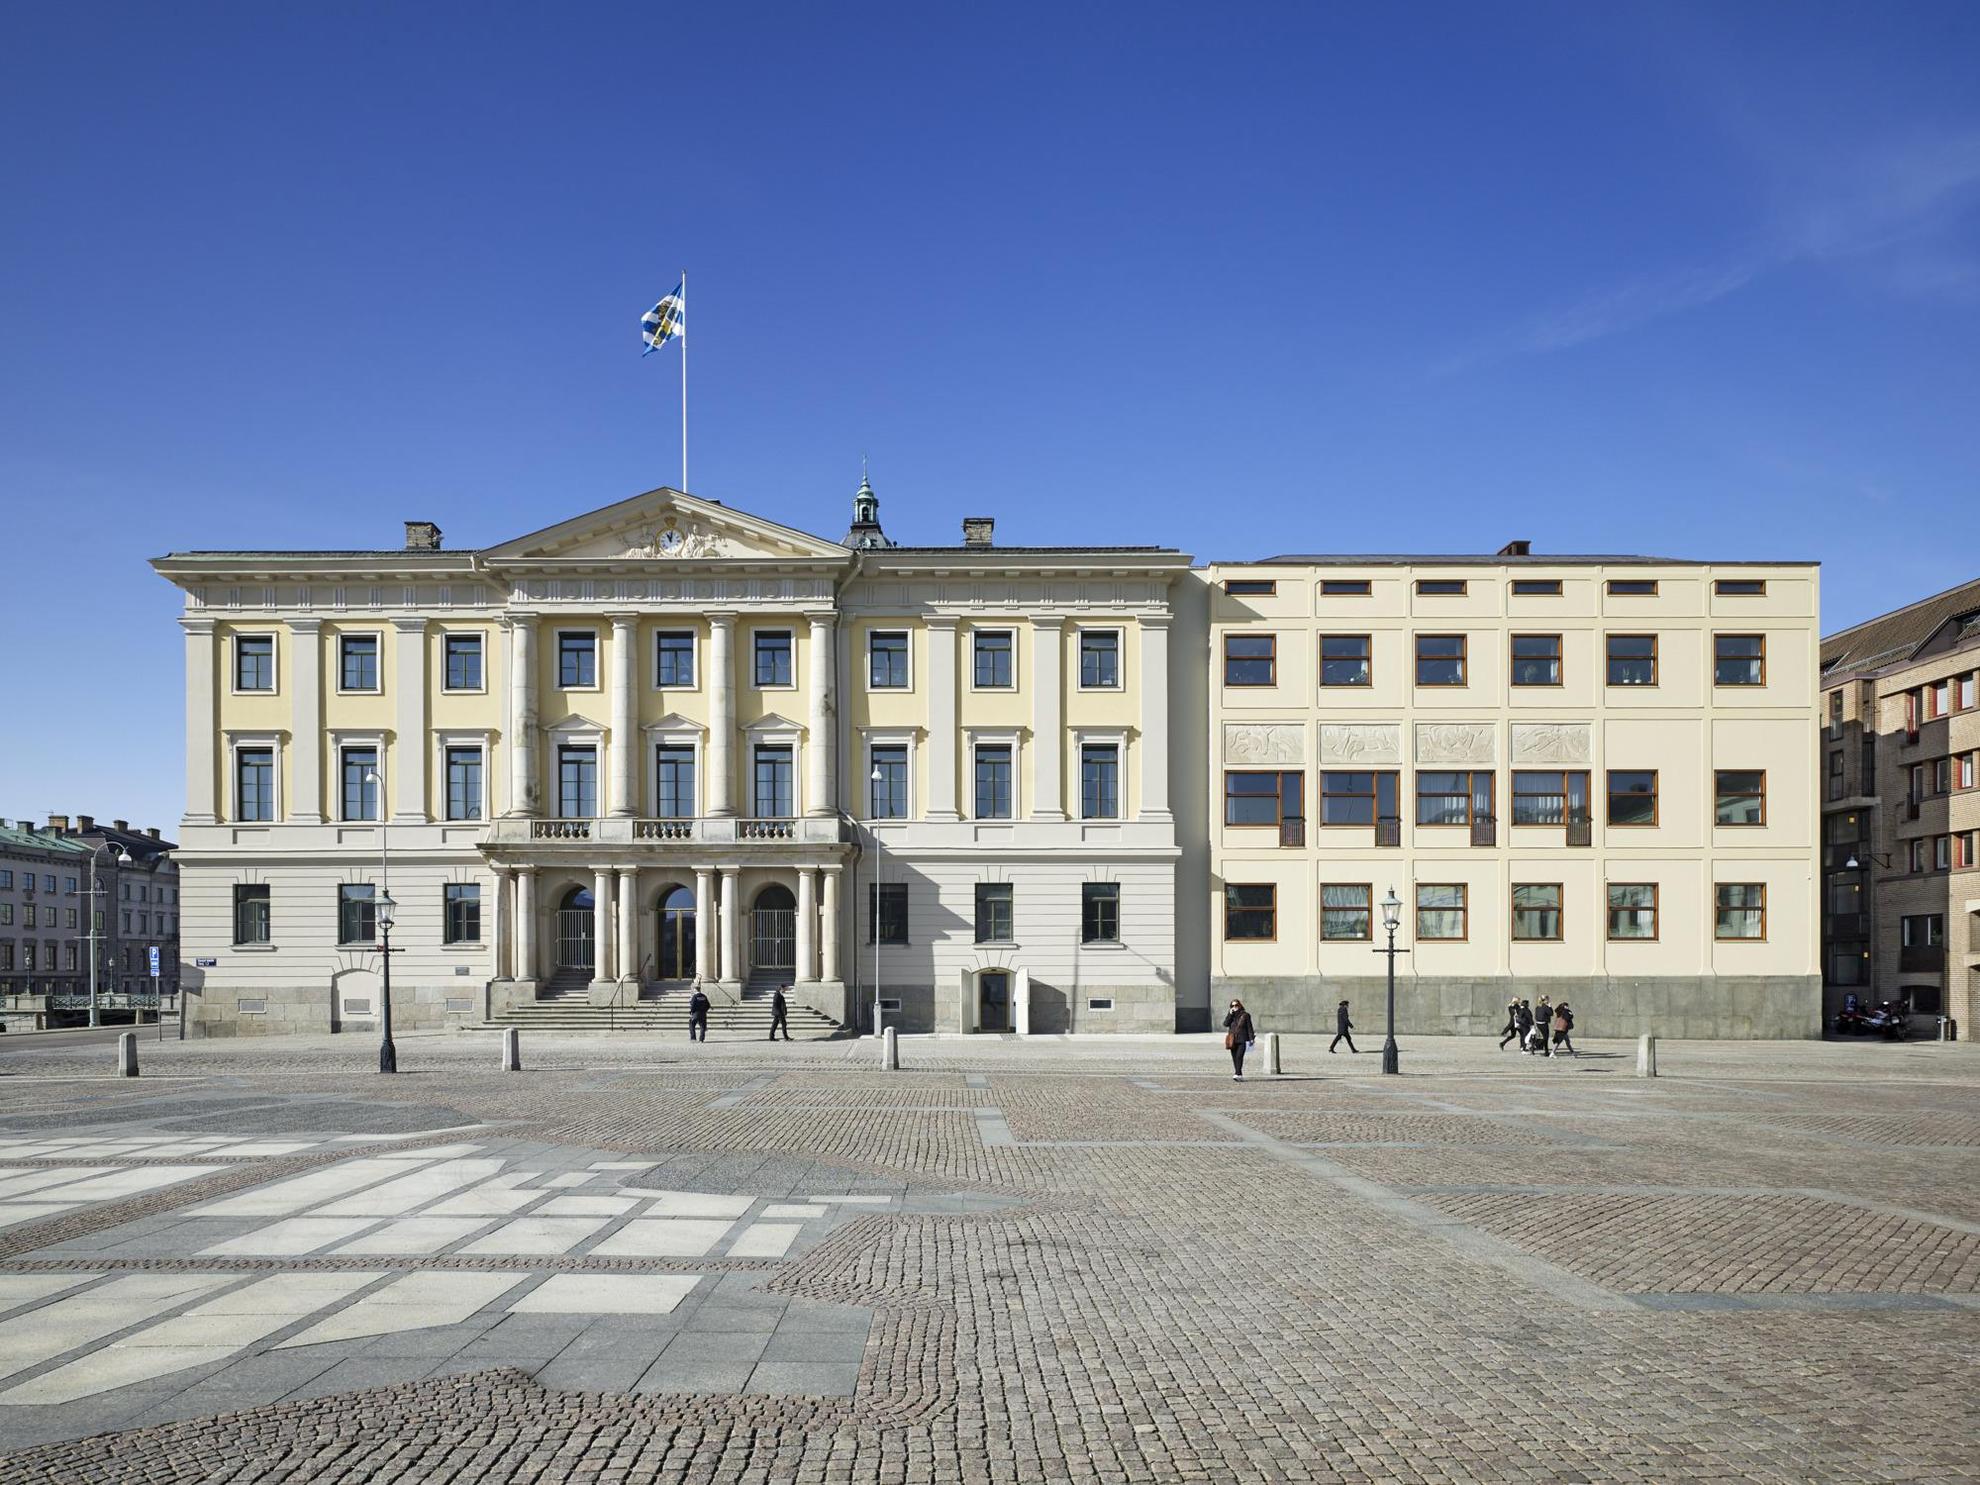 The Gothenburg Town Hall